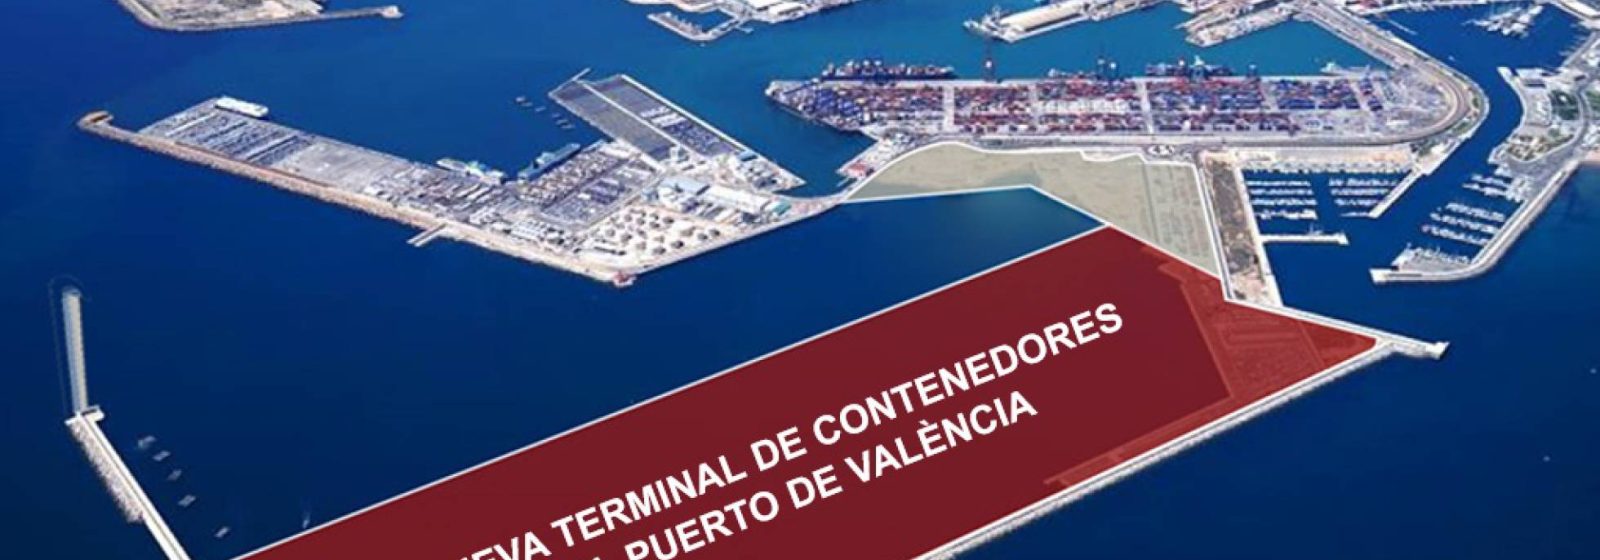 20220329 terminal de contenedores in Valencia